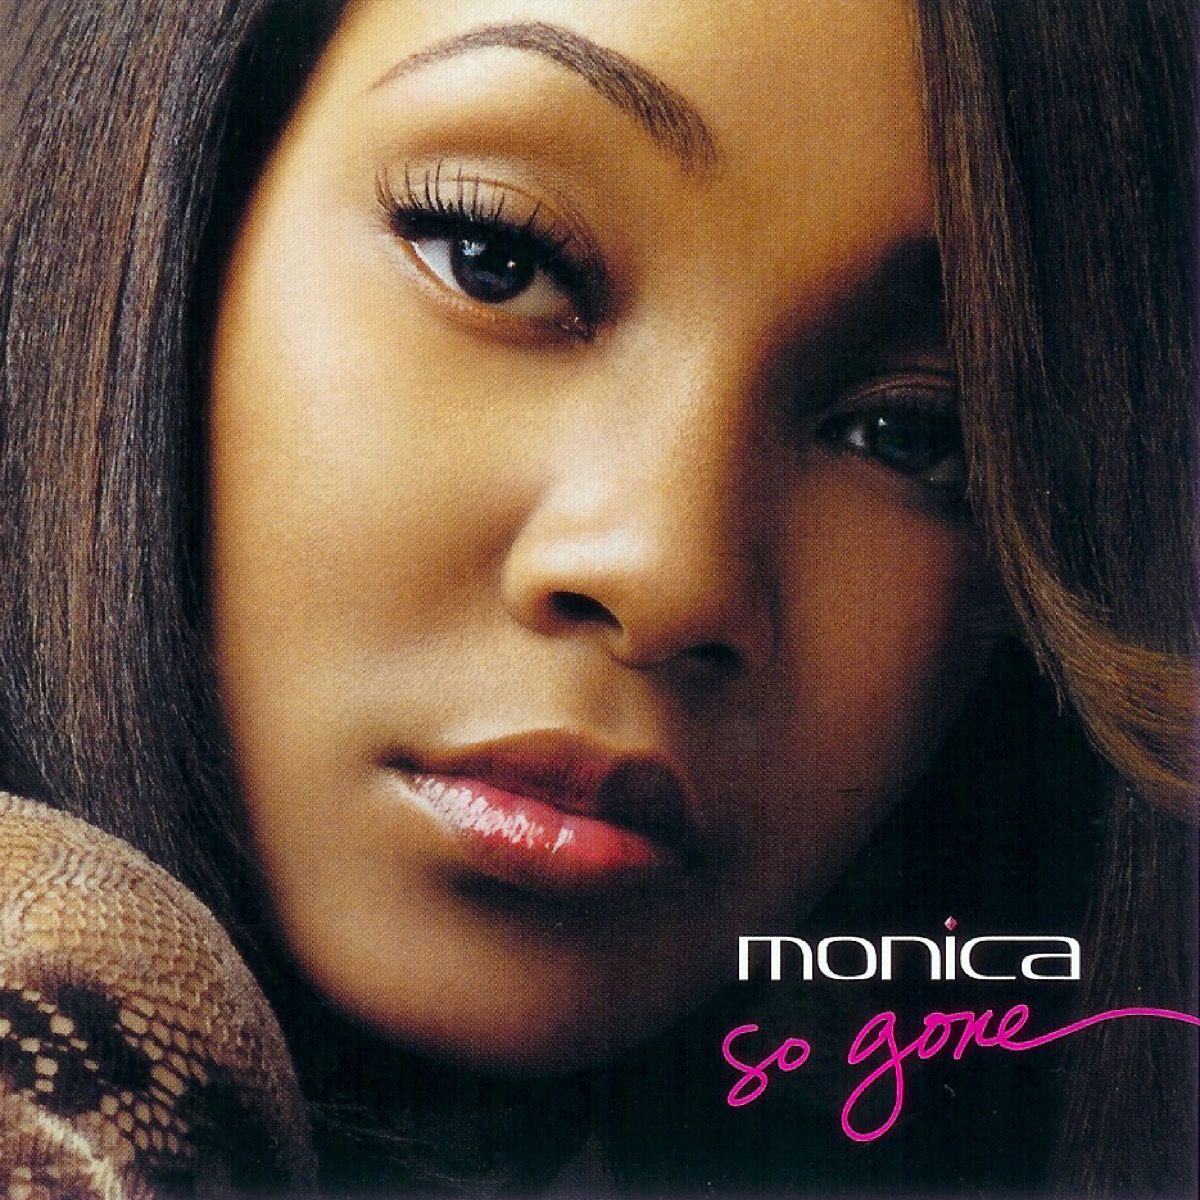 monica so go single cover